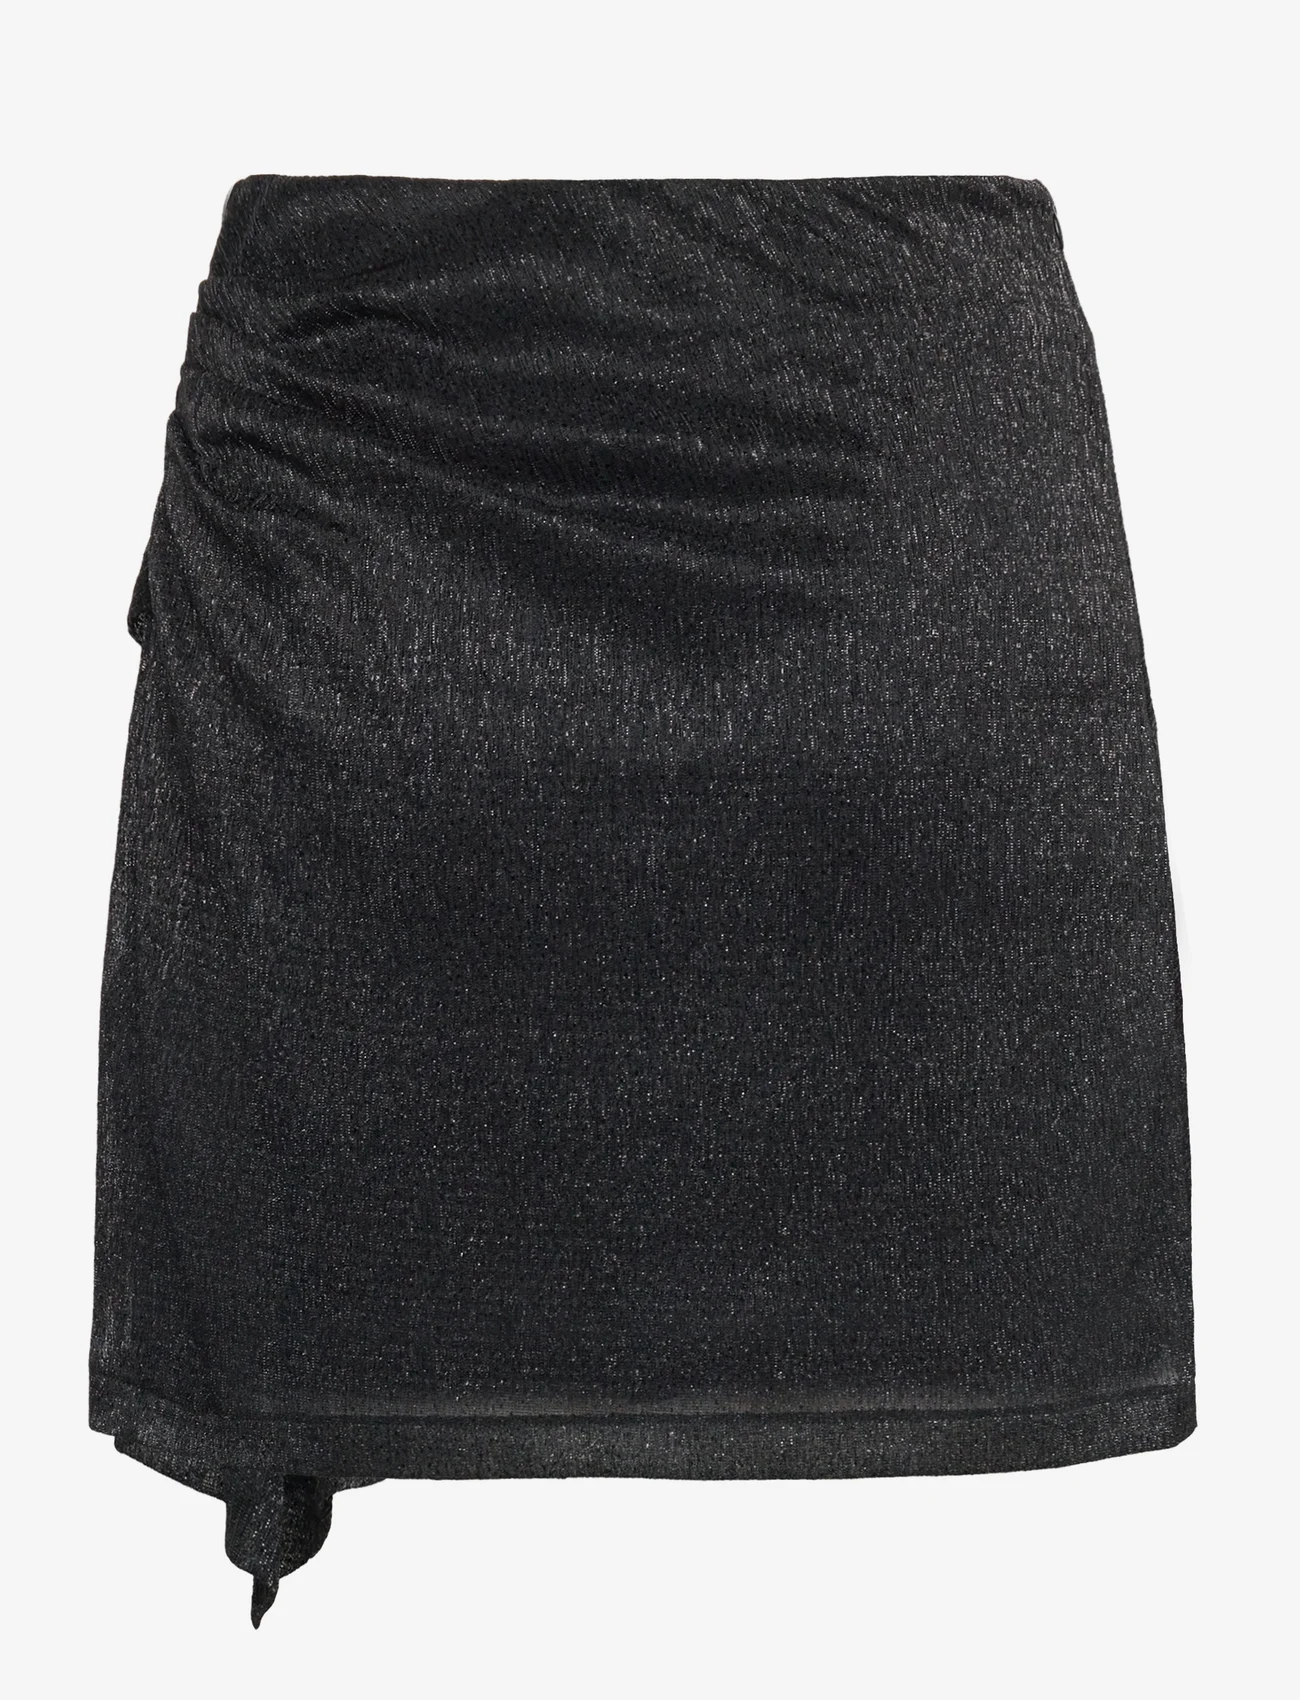 IRO - NUDA - short skirts - black metallic - 1